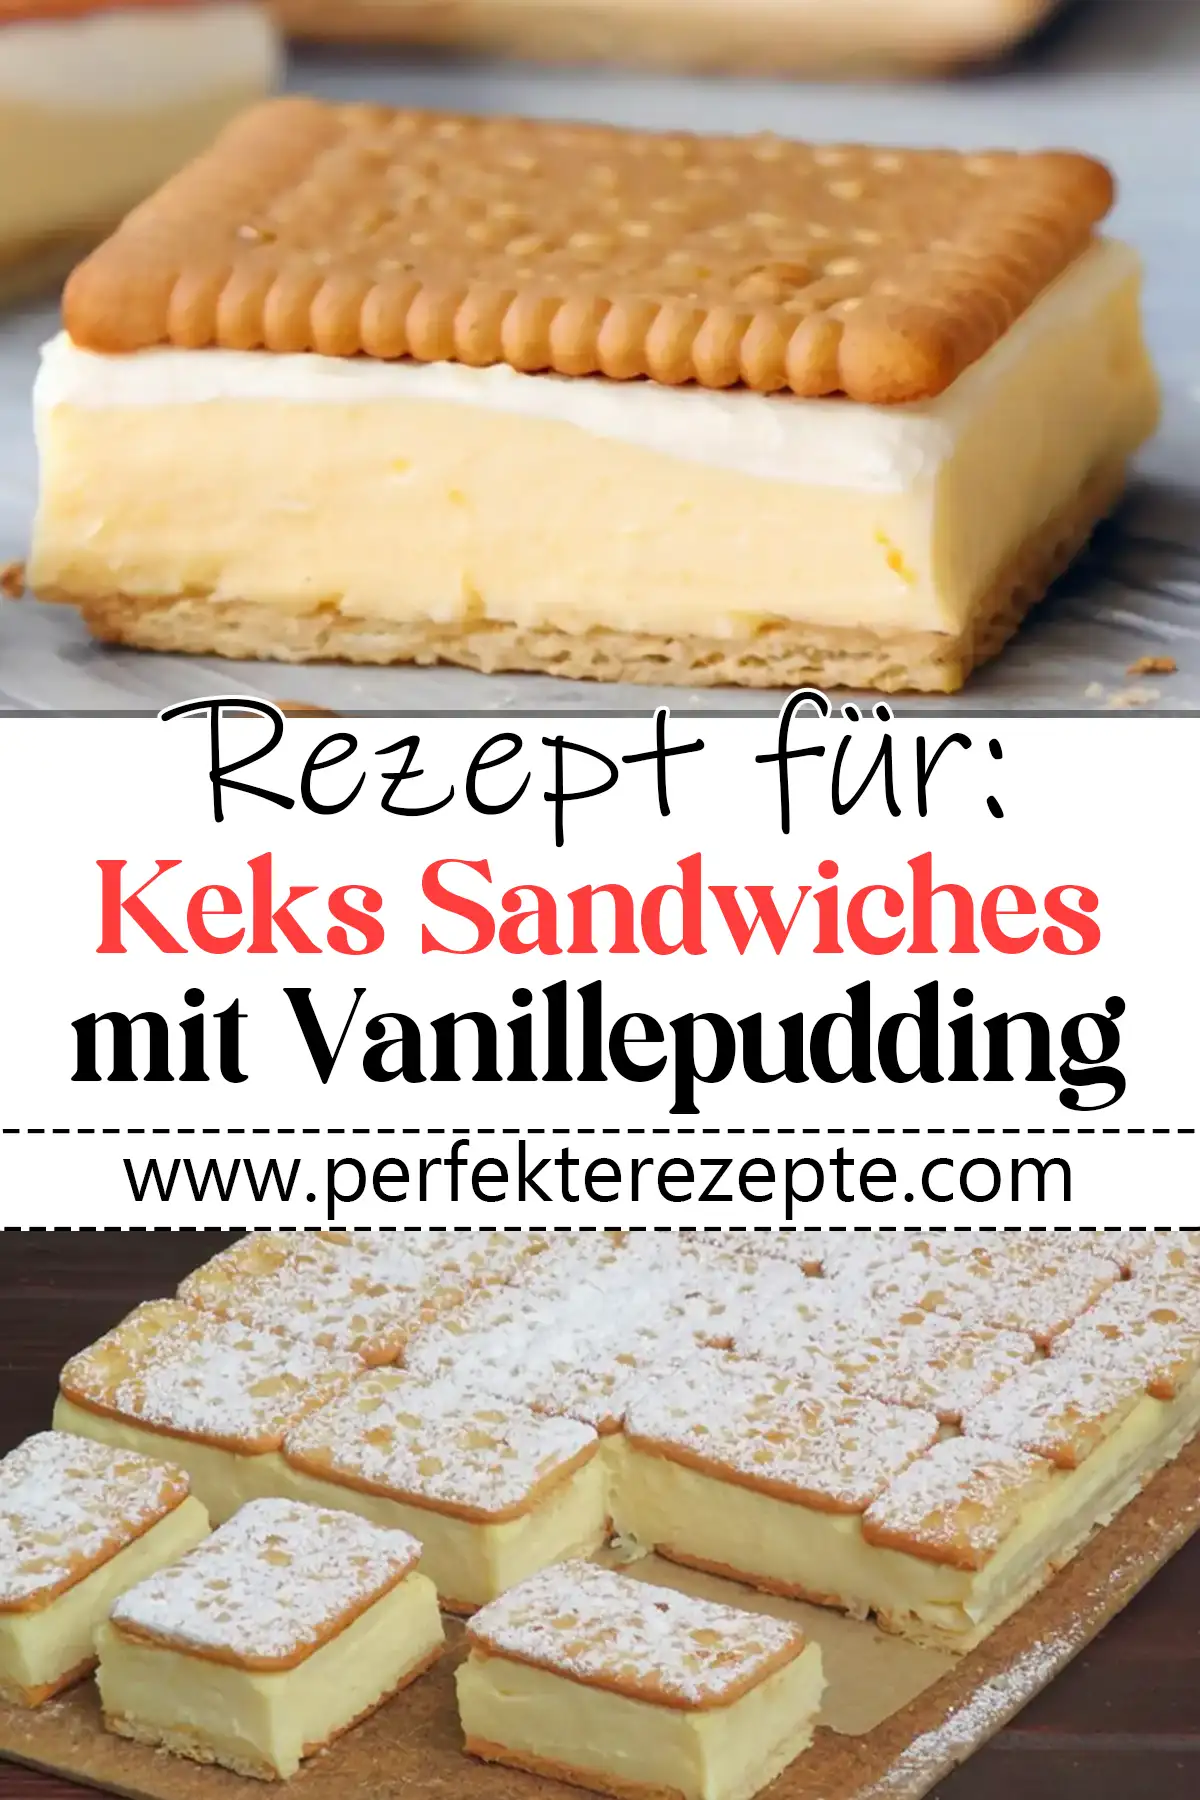 Butterkeks Sandwiches mit Vanillepudding Rezept